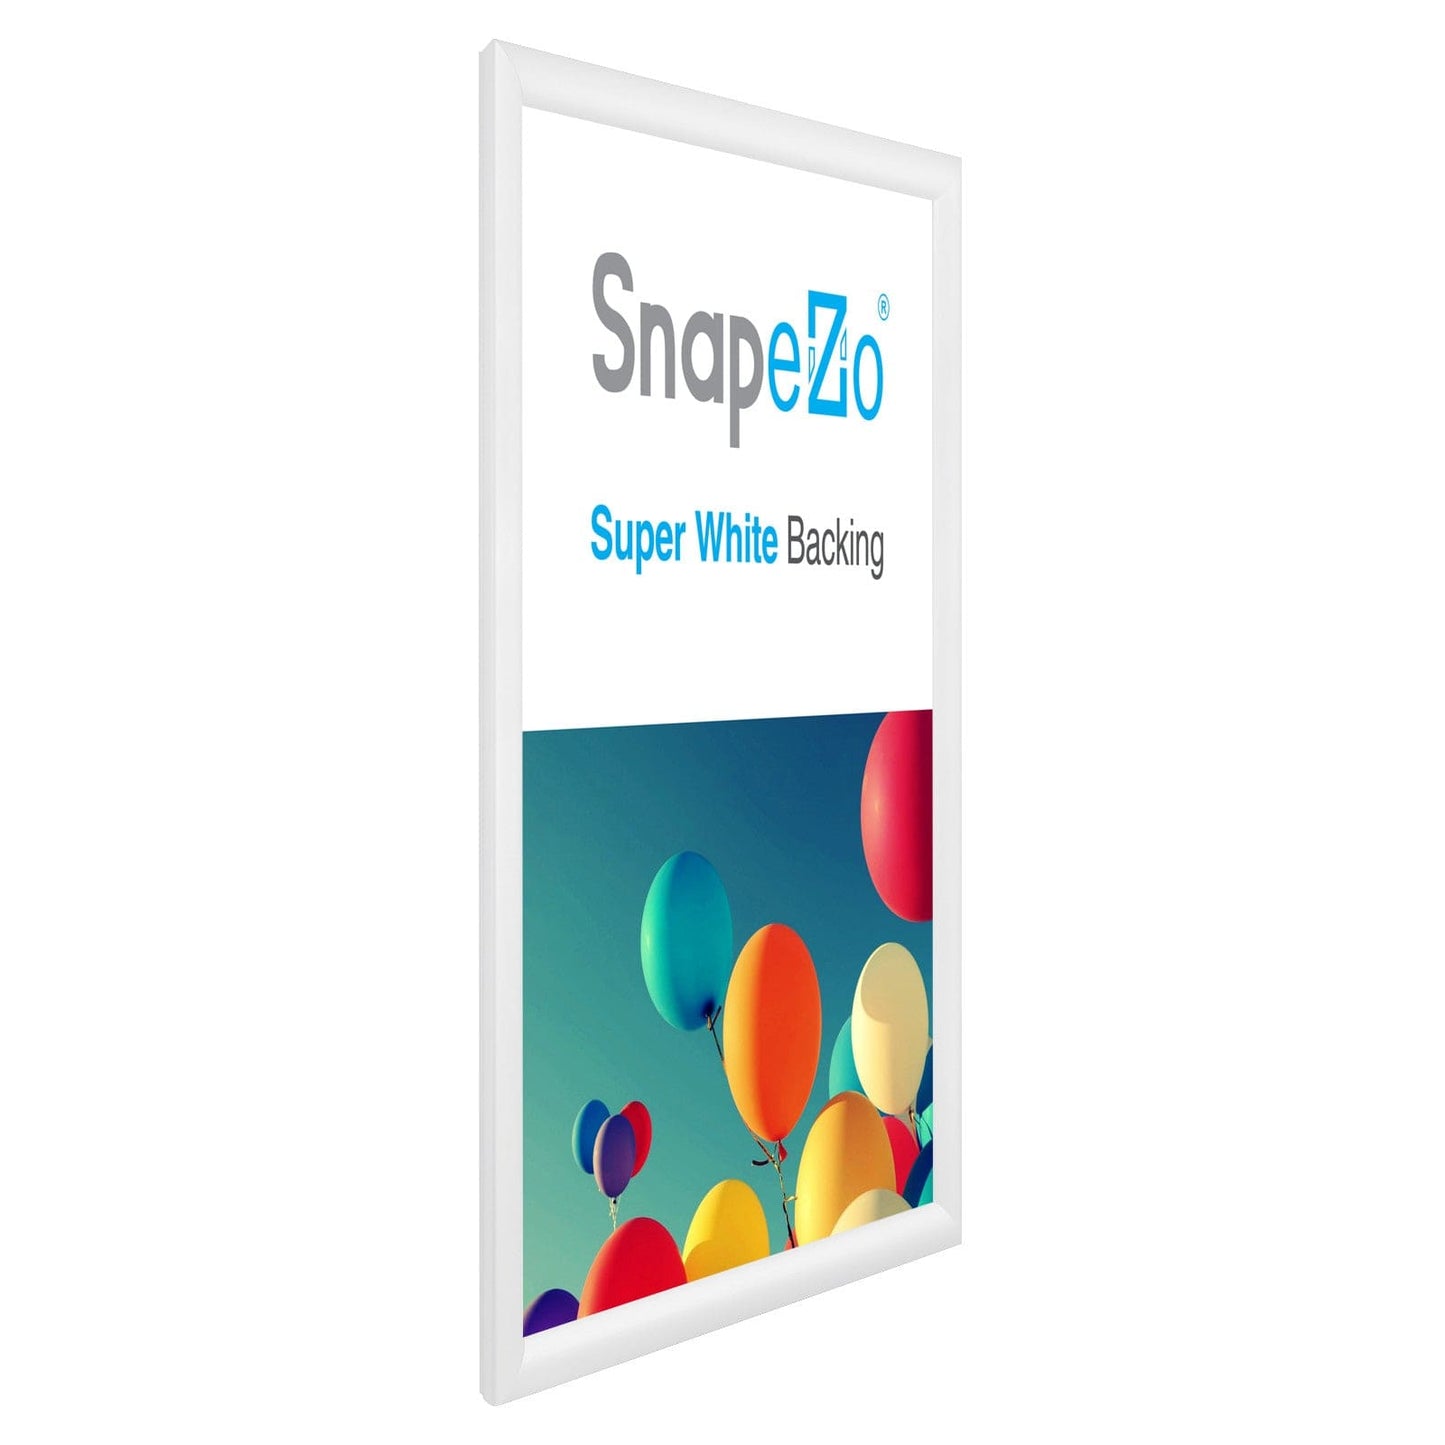 19x24 White SnapeZo® Snap Frame - 1.2" Profile - Snap Frames Direct